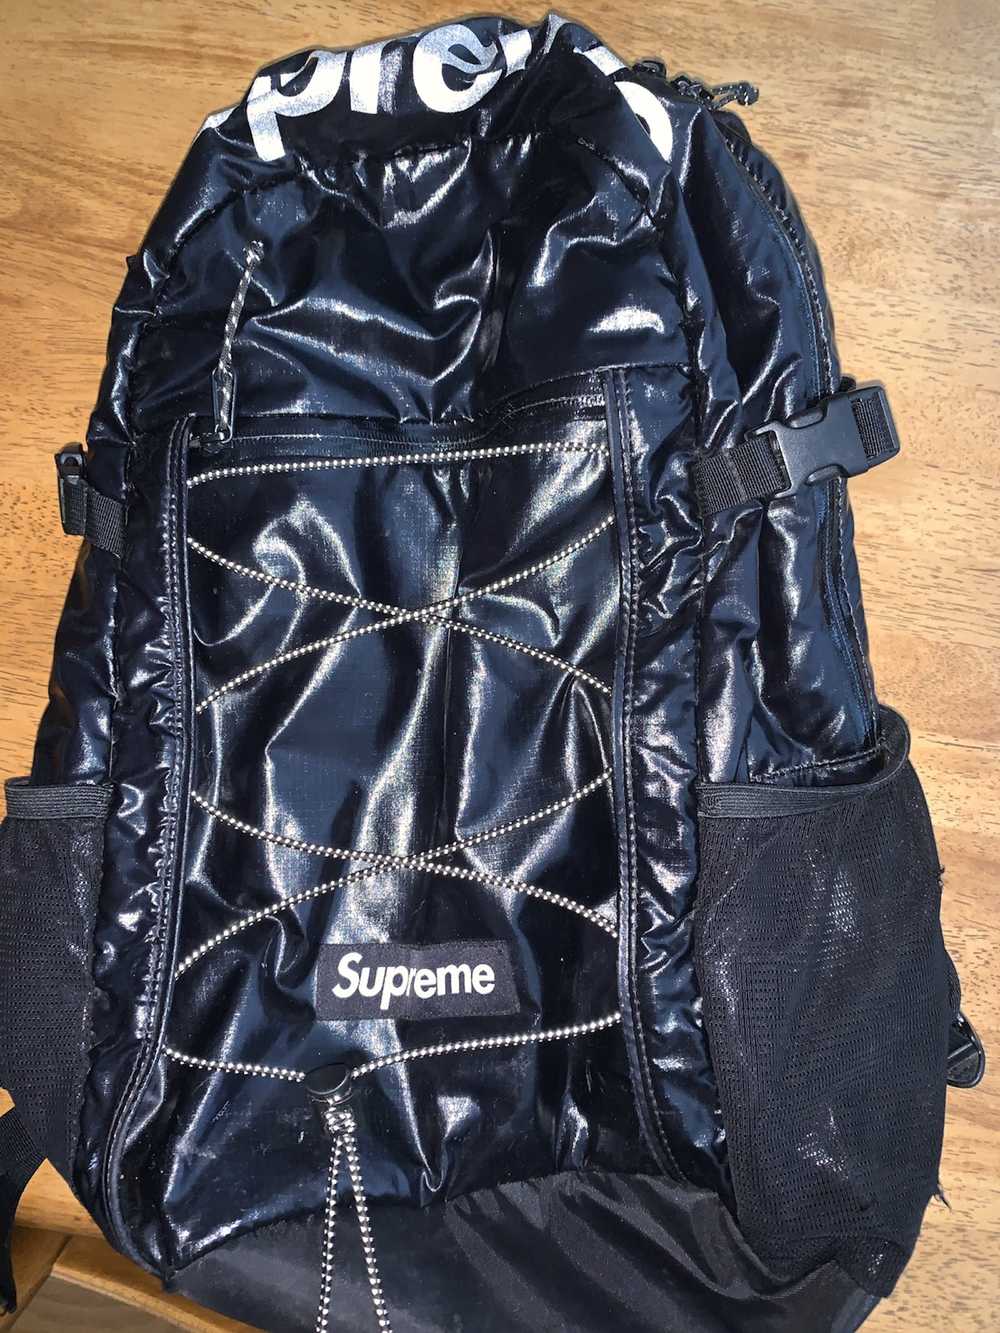 Supreme Supreme Backpack - image 1